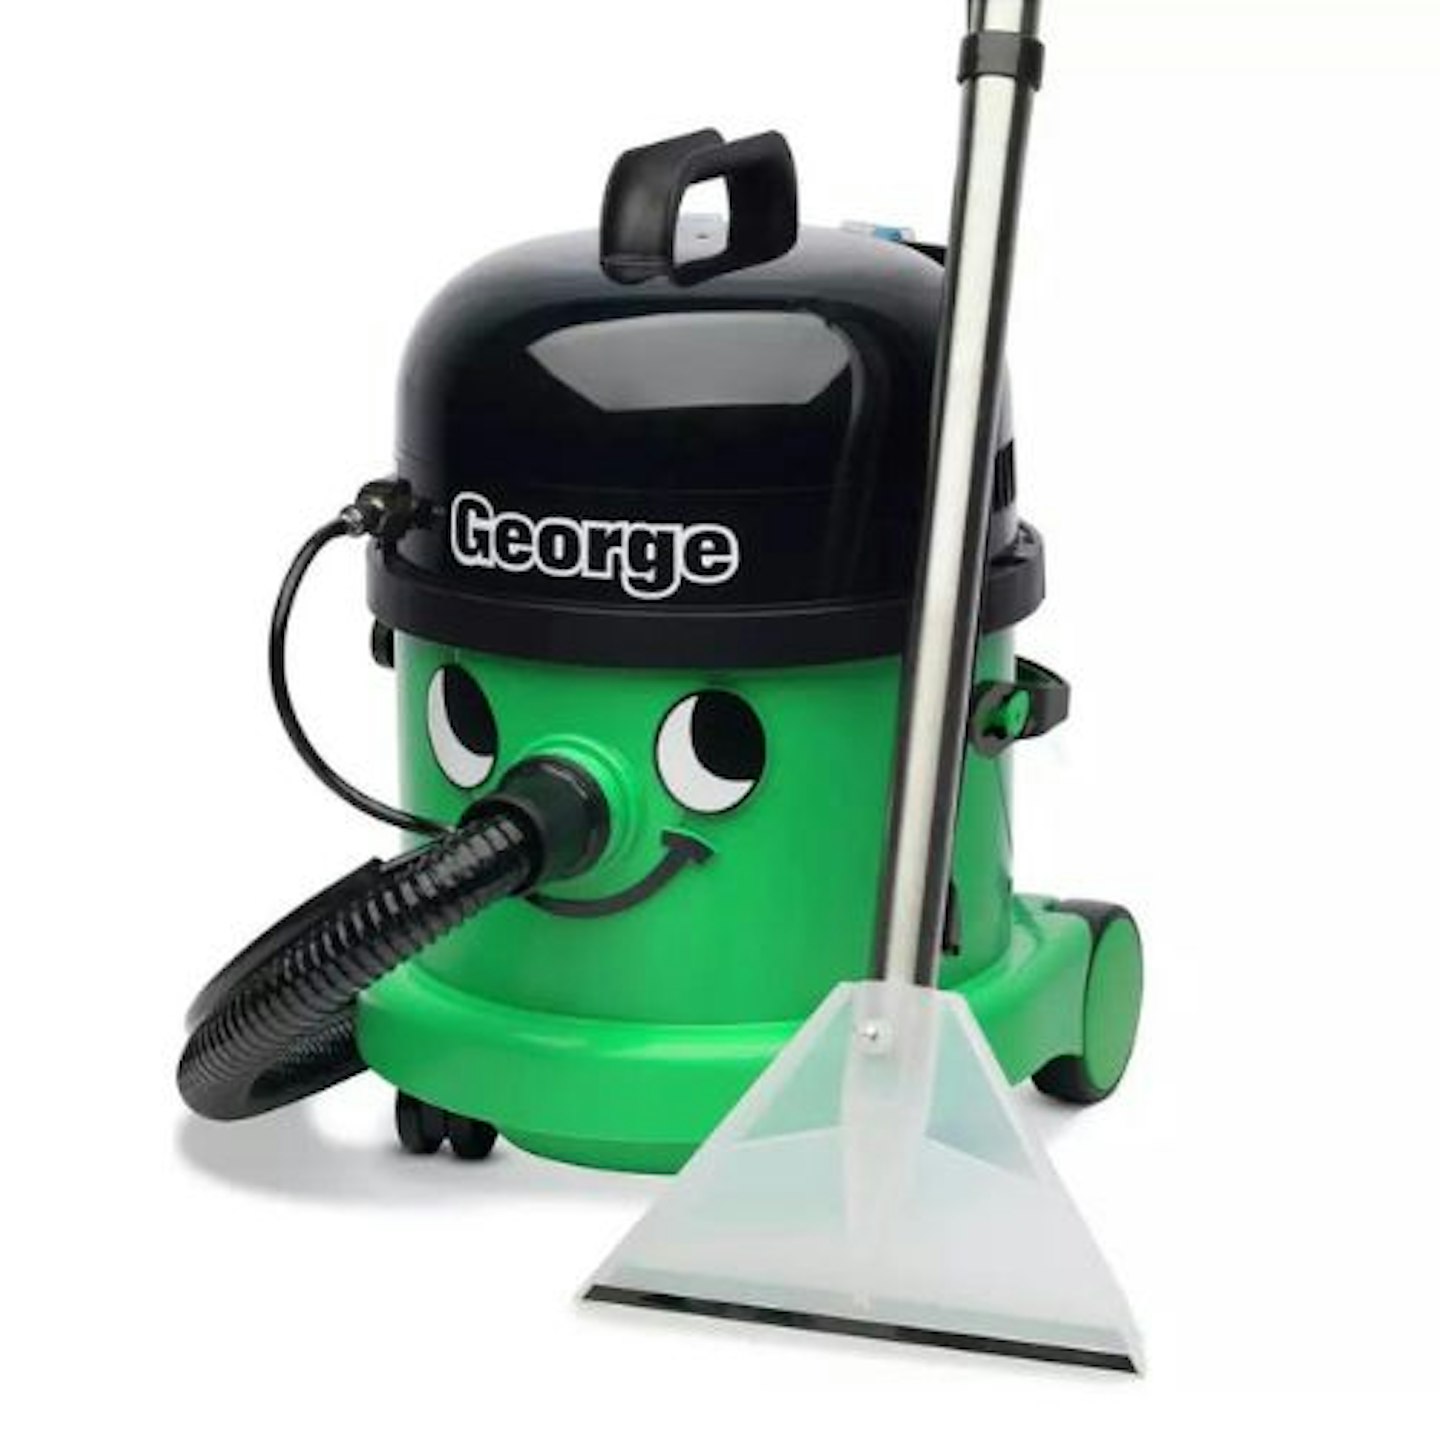 George Corded Carpet Cleaner